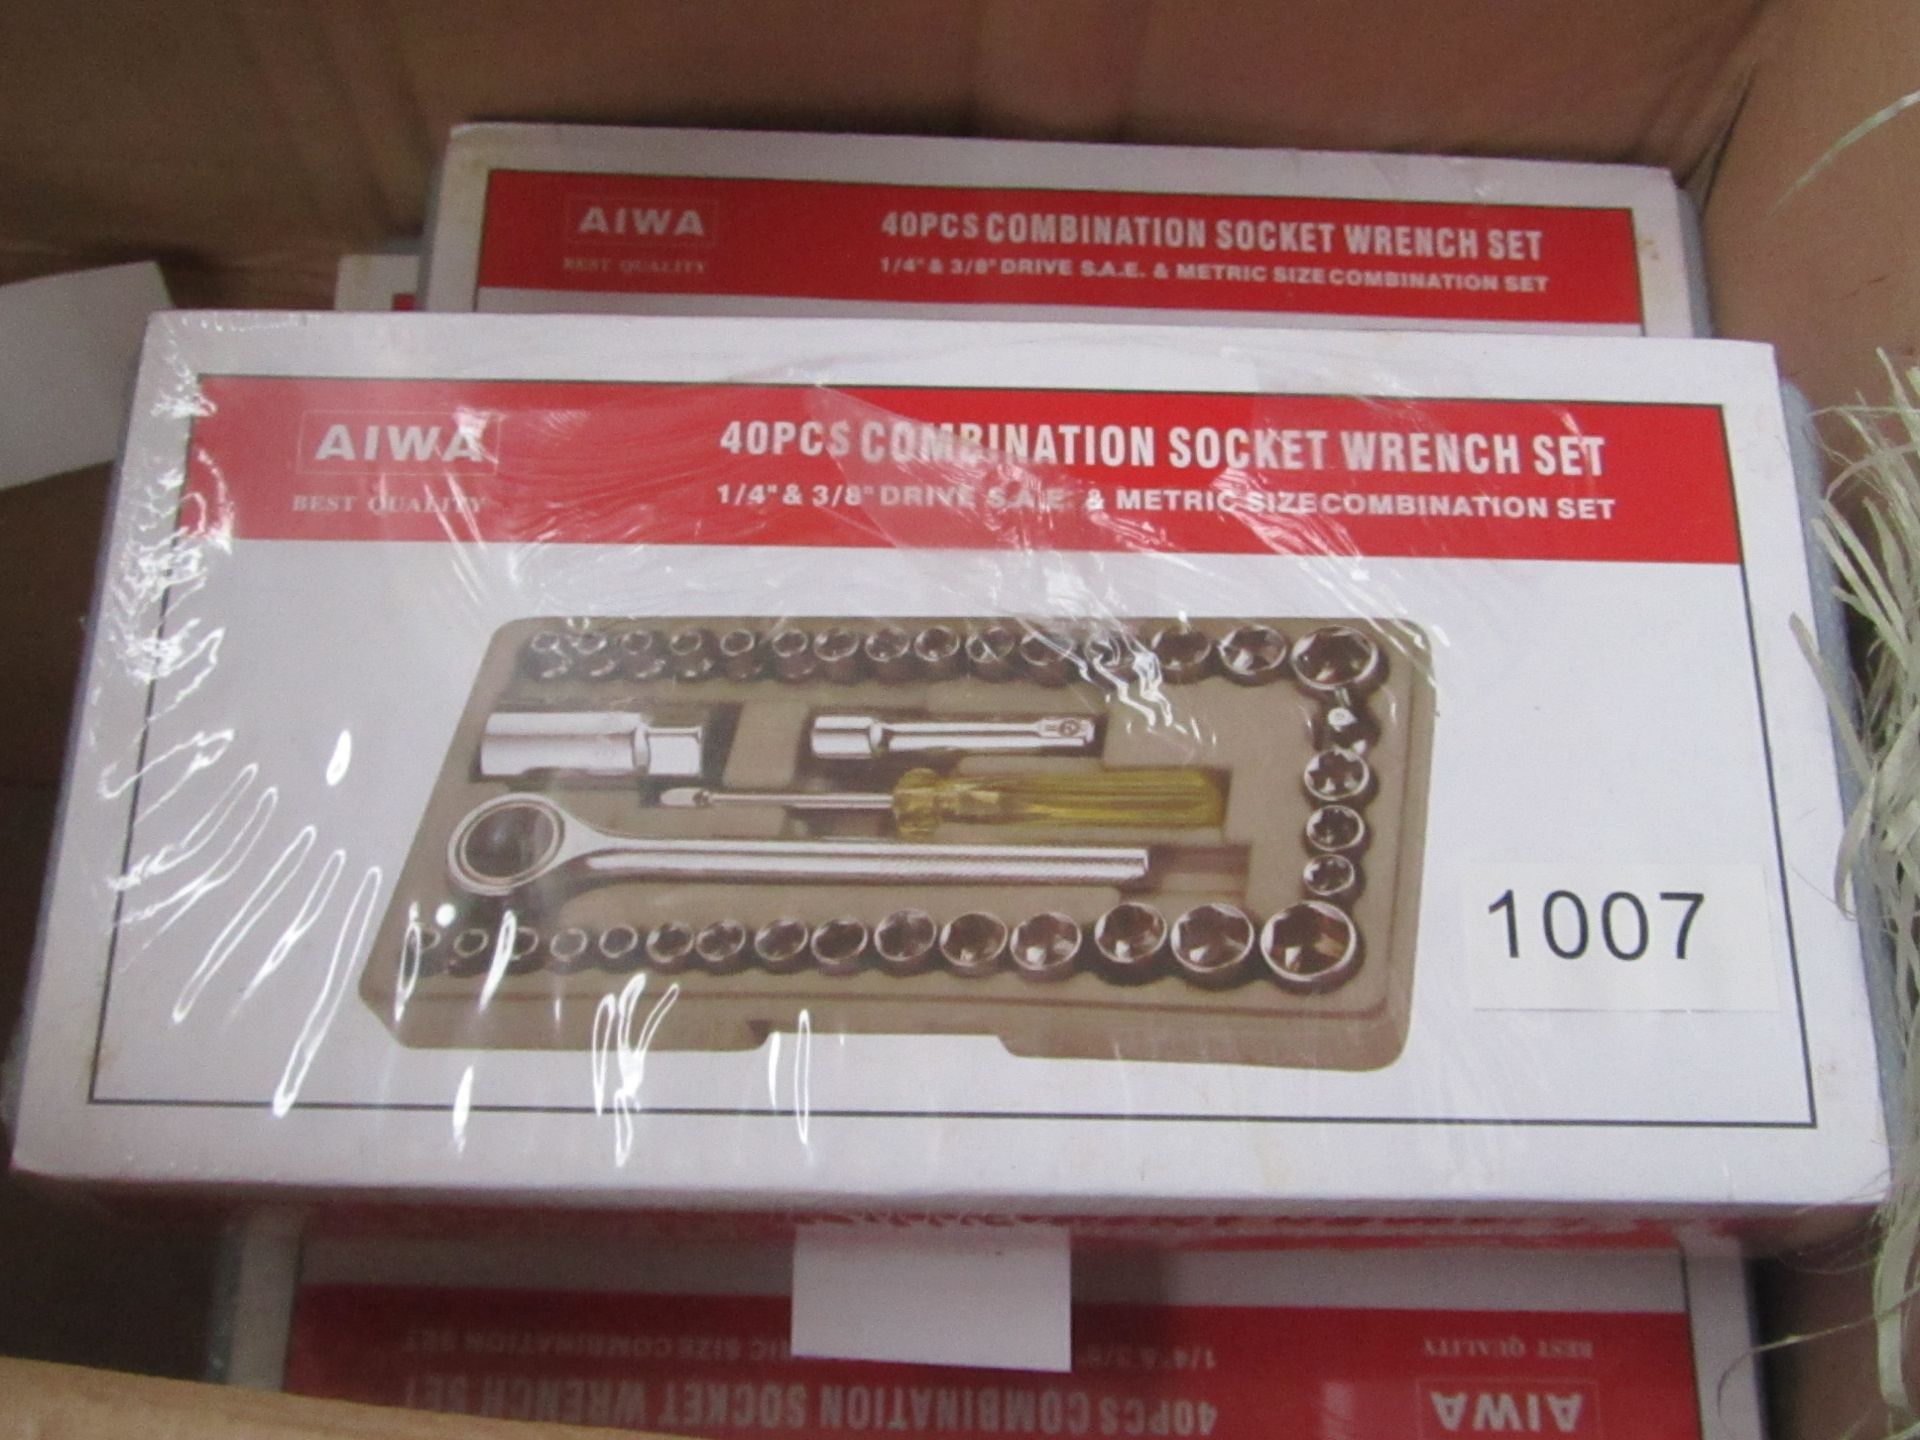 Aiwa, 40pcs combination socket wrench set, boxed and new